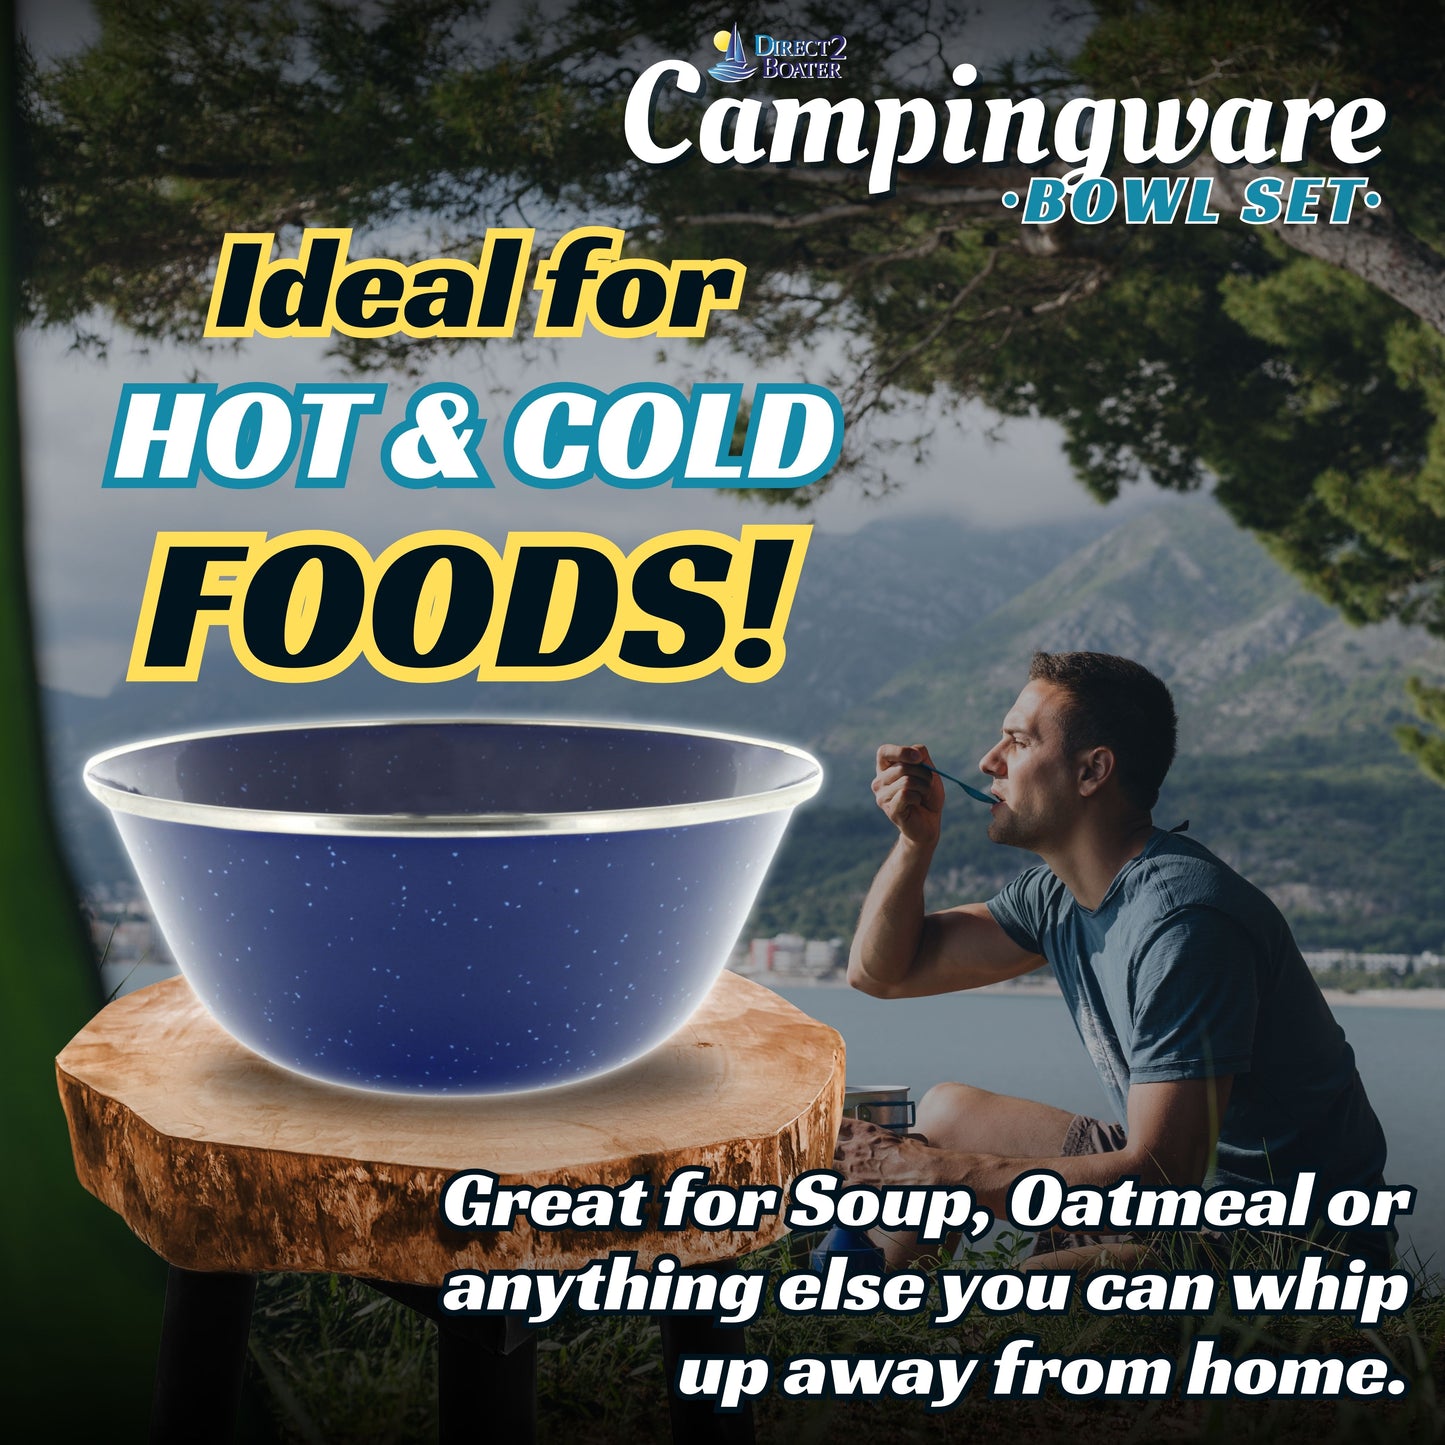 6" Enamel Camping Bowl - 8 Pack Metal Camping Bowl with Blue Enamel Finish - For Camping, Hiking & Picnics